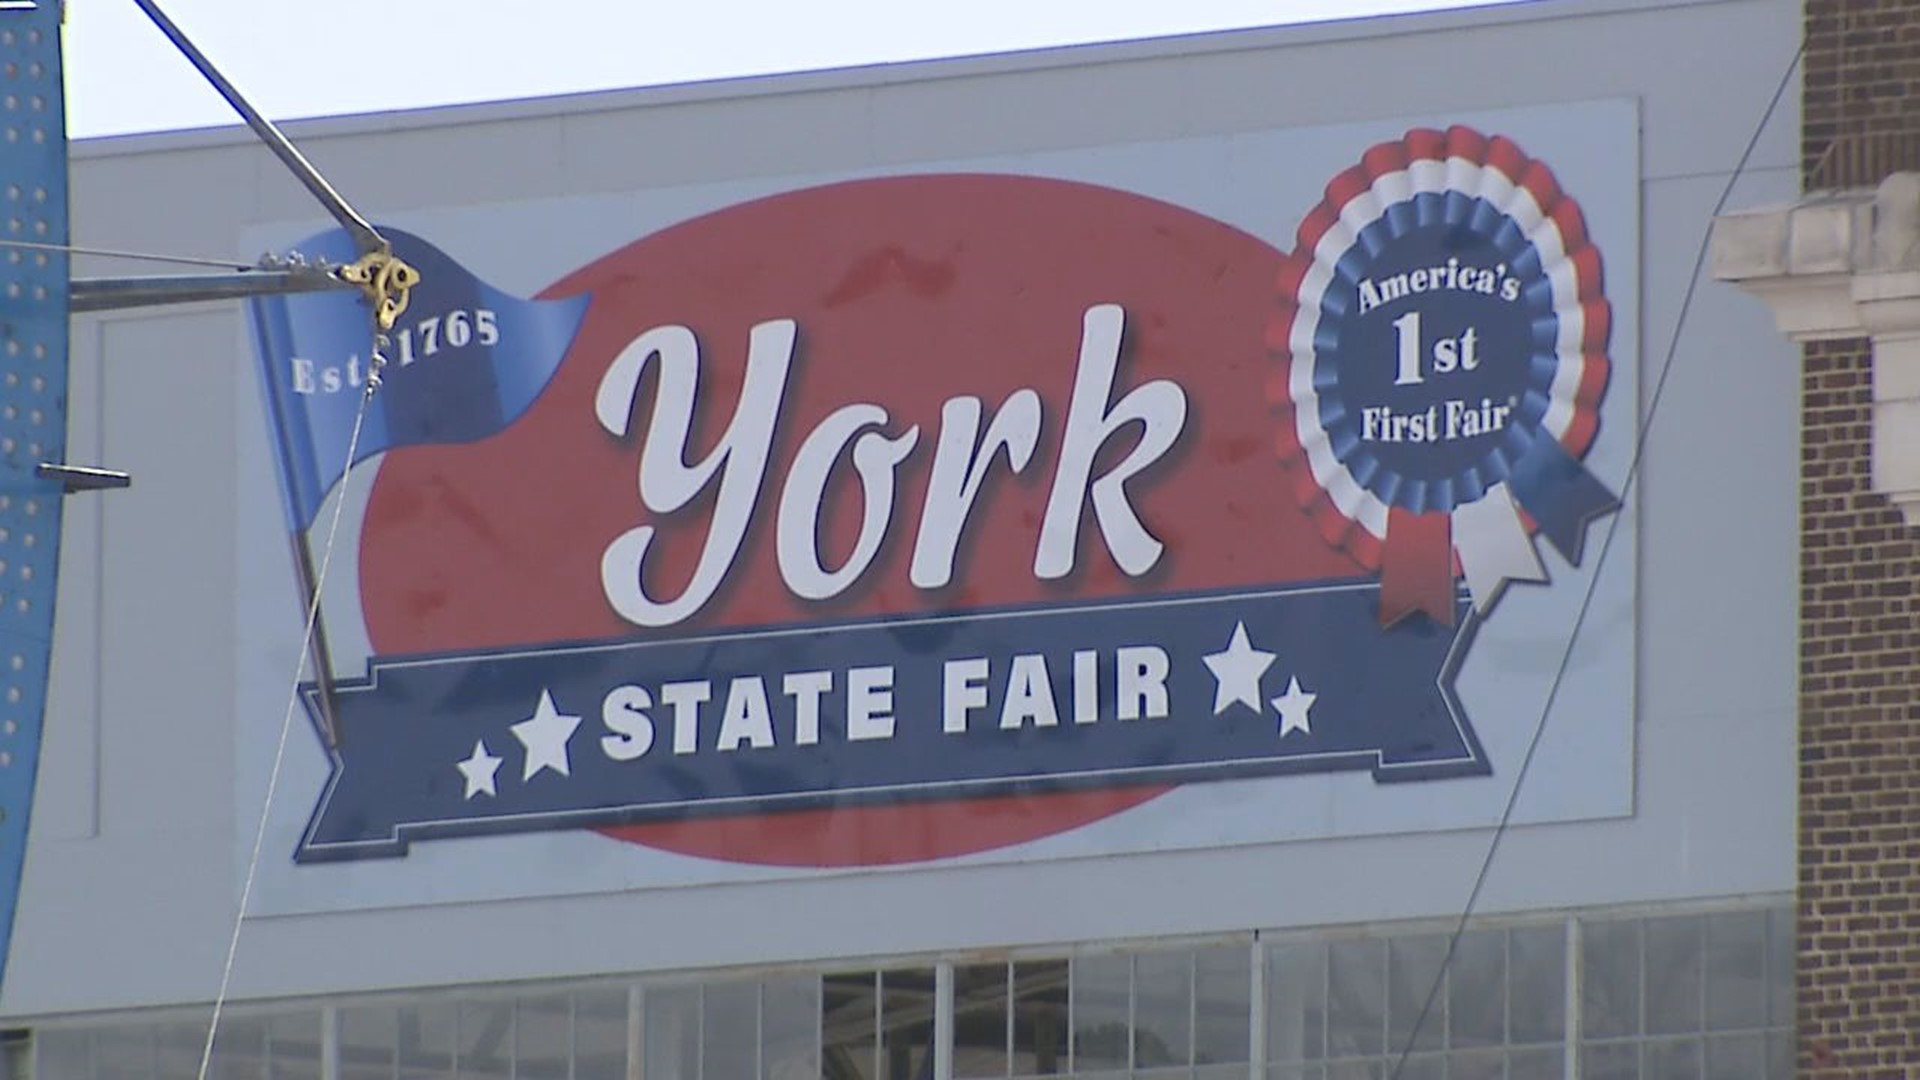 The 2023 York State Fair runs July 21-30 at the York Fairgrounds.